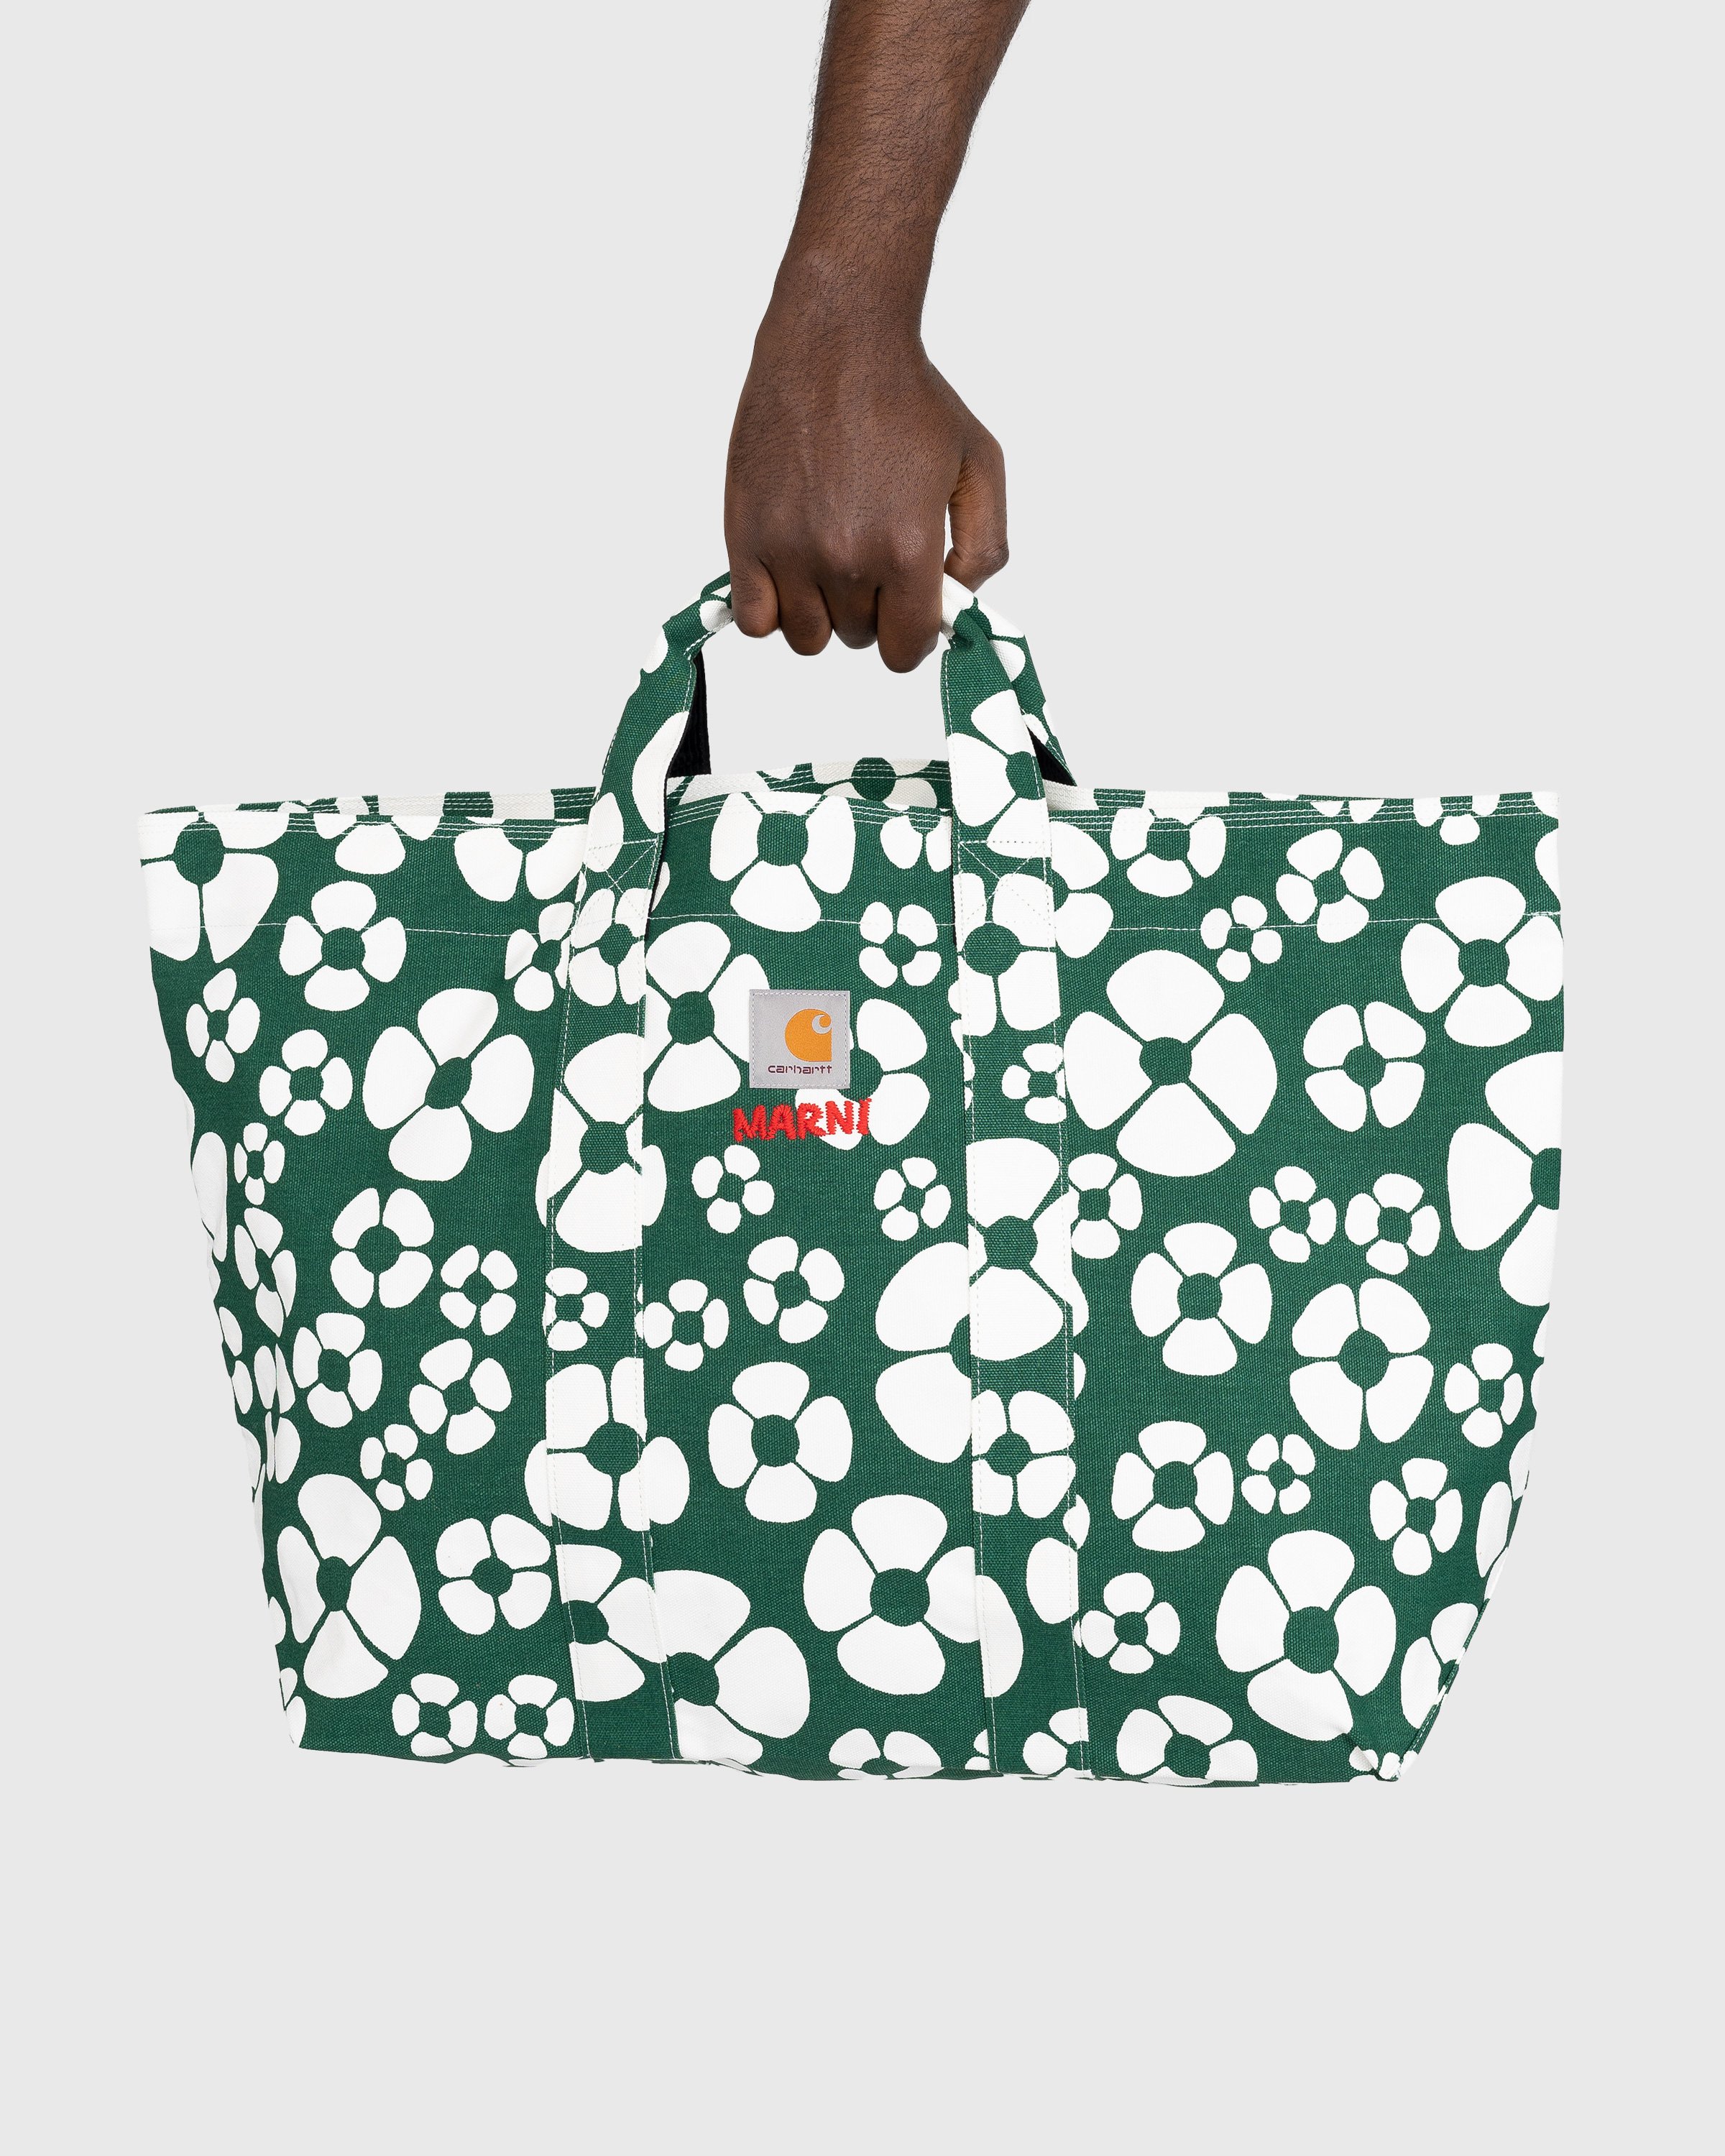 Marni x Carhartt WIP - Floral Shopper Tote Green - Accessories - Green - Image 5